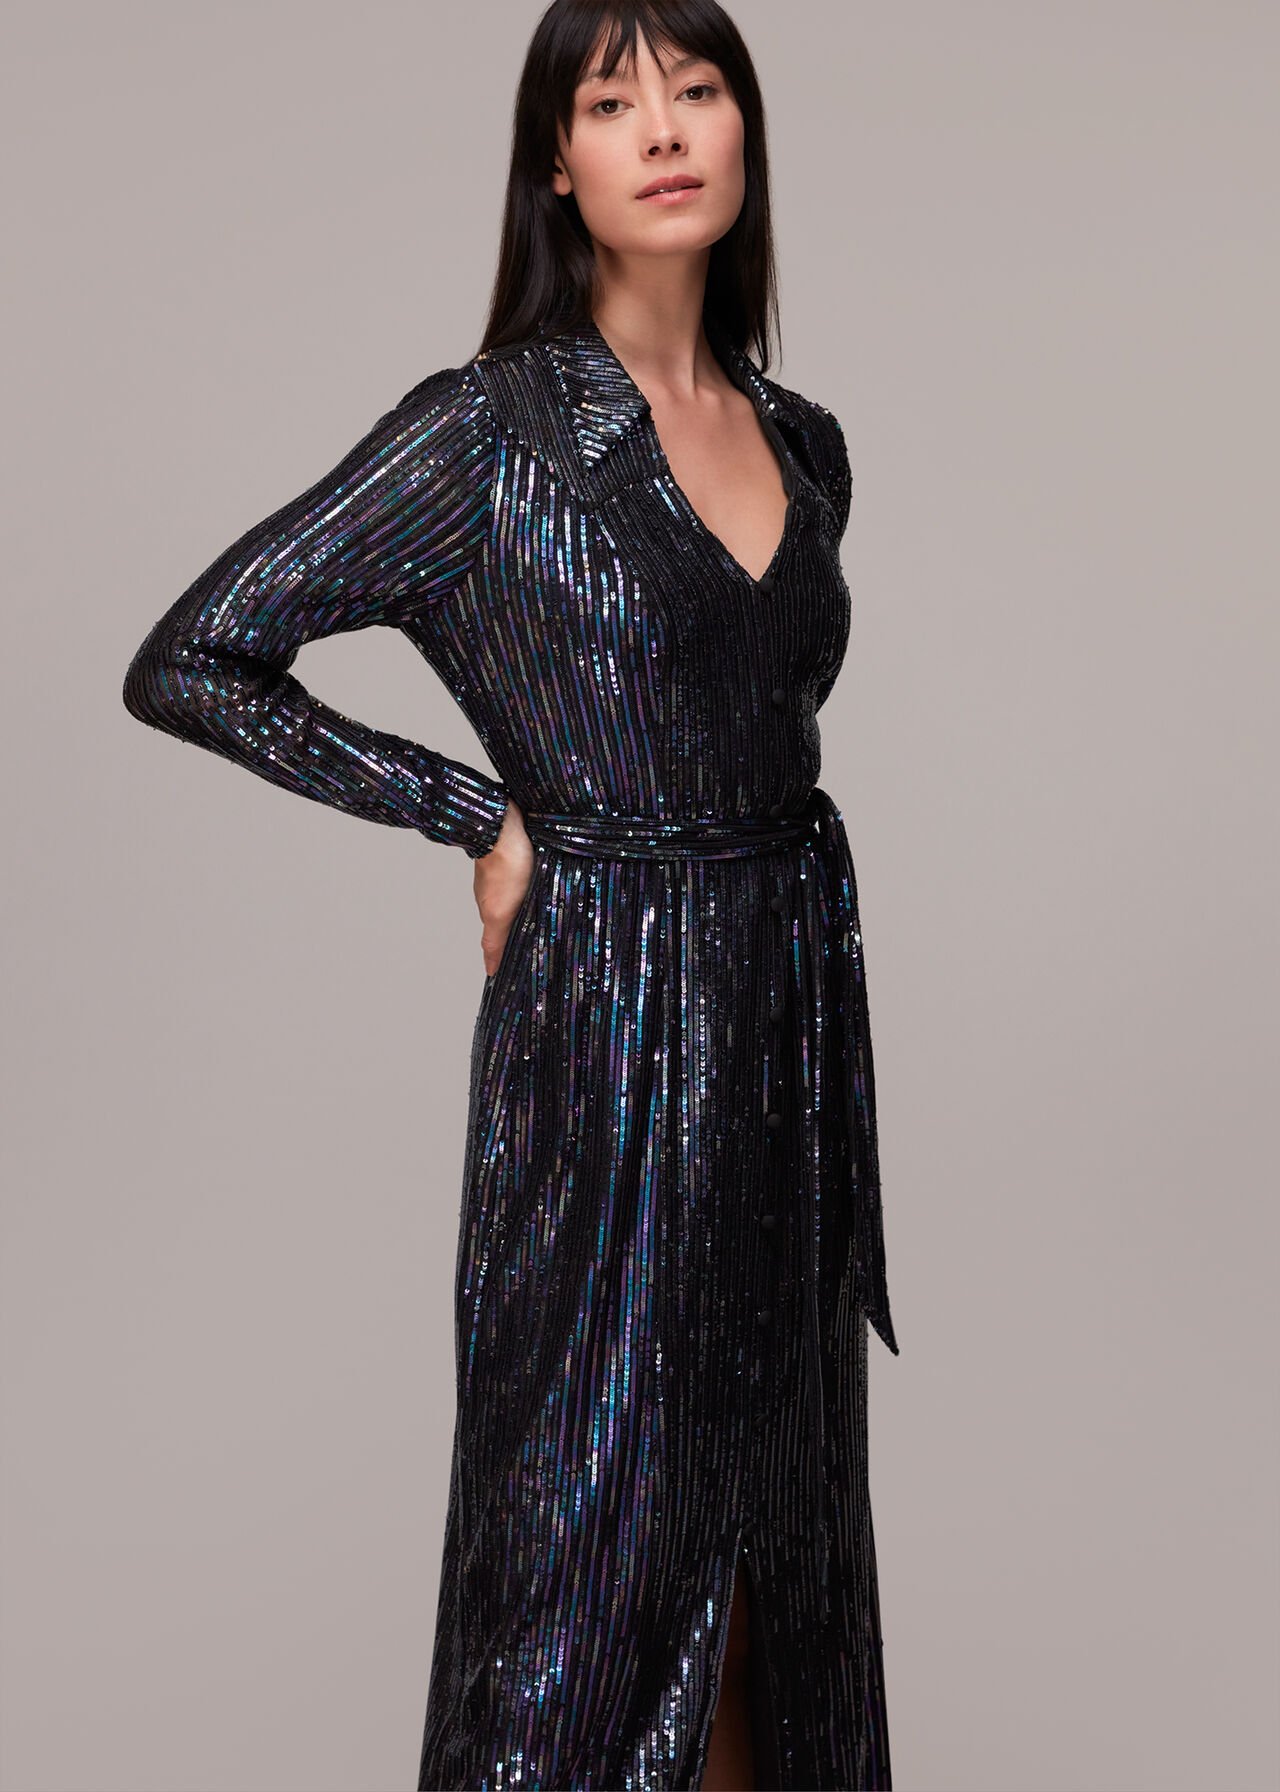 Stripe Sequin Midi Dress